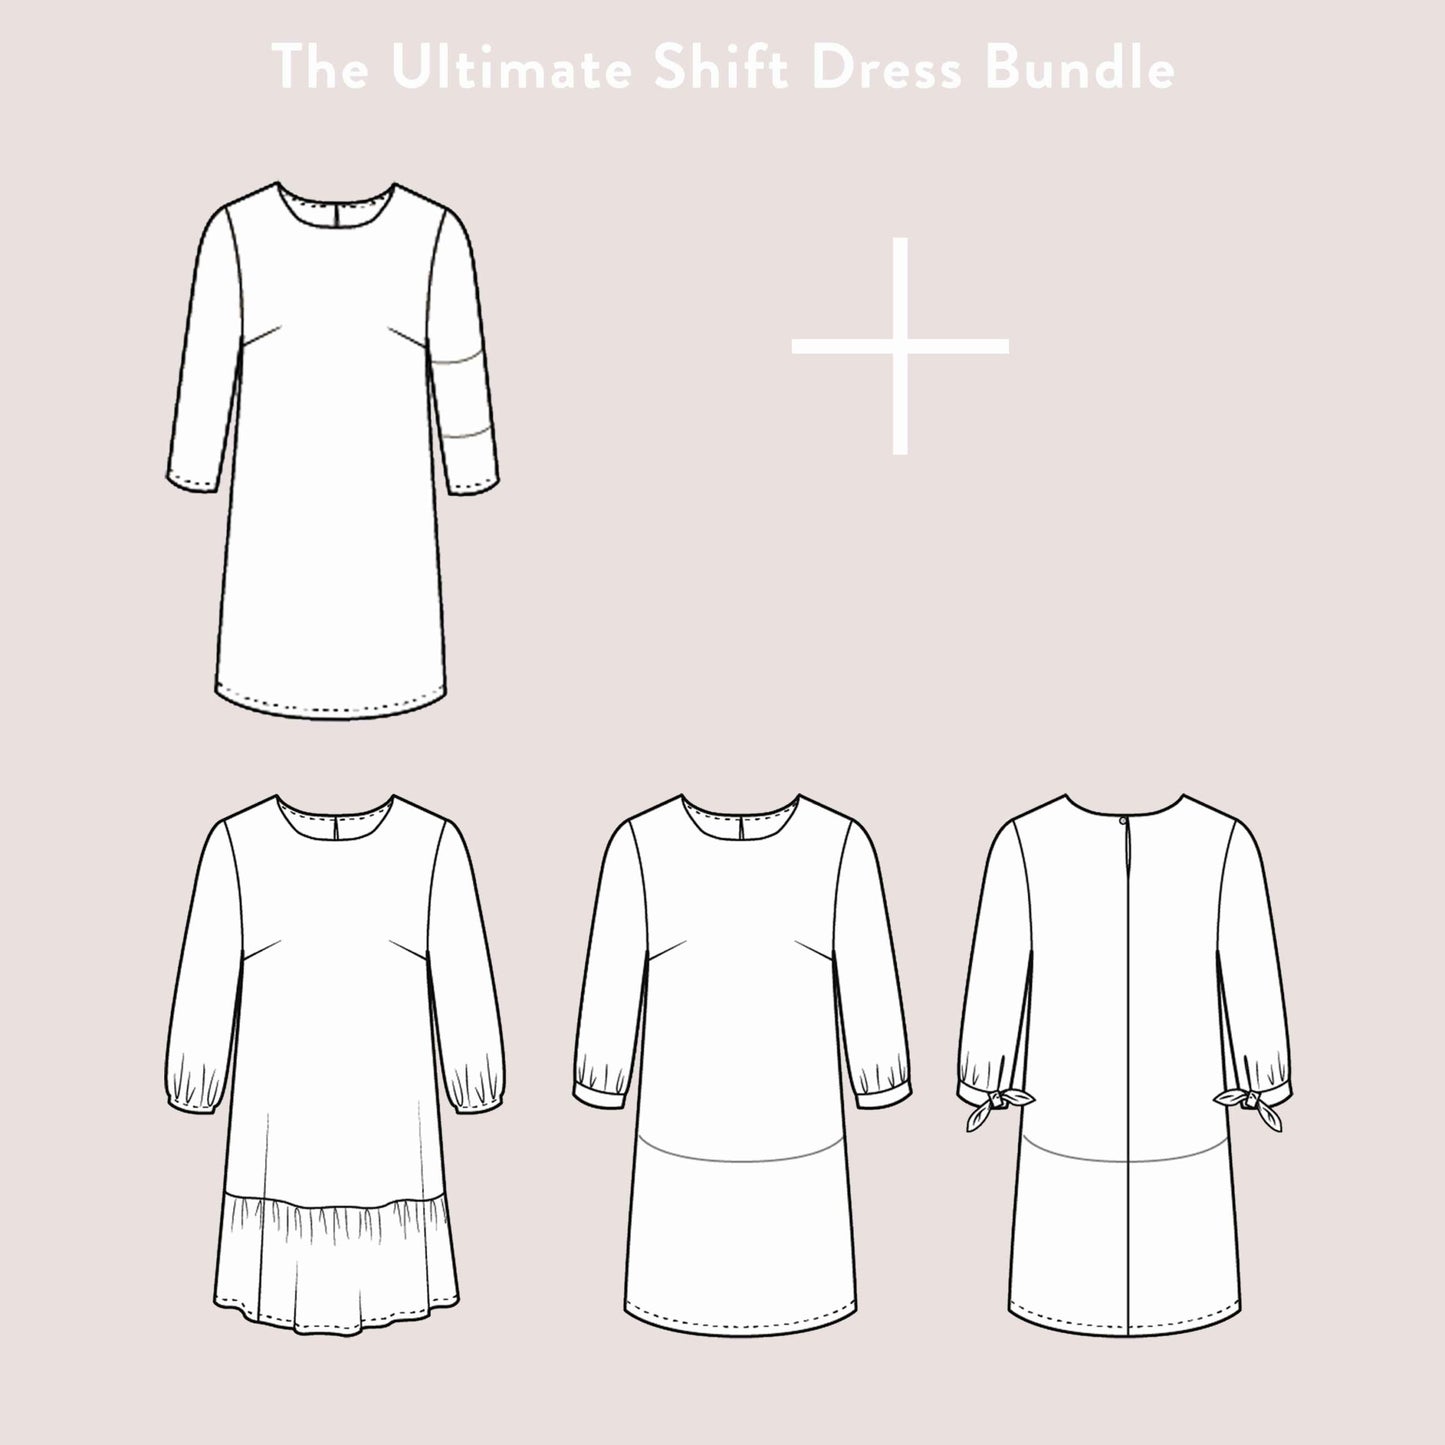 The Ultimate Shift Dress Bundle